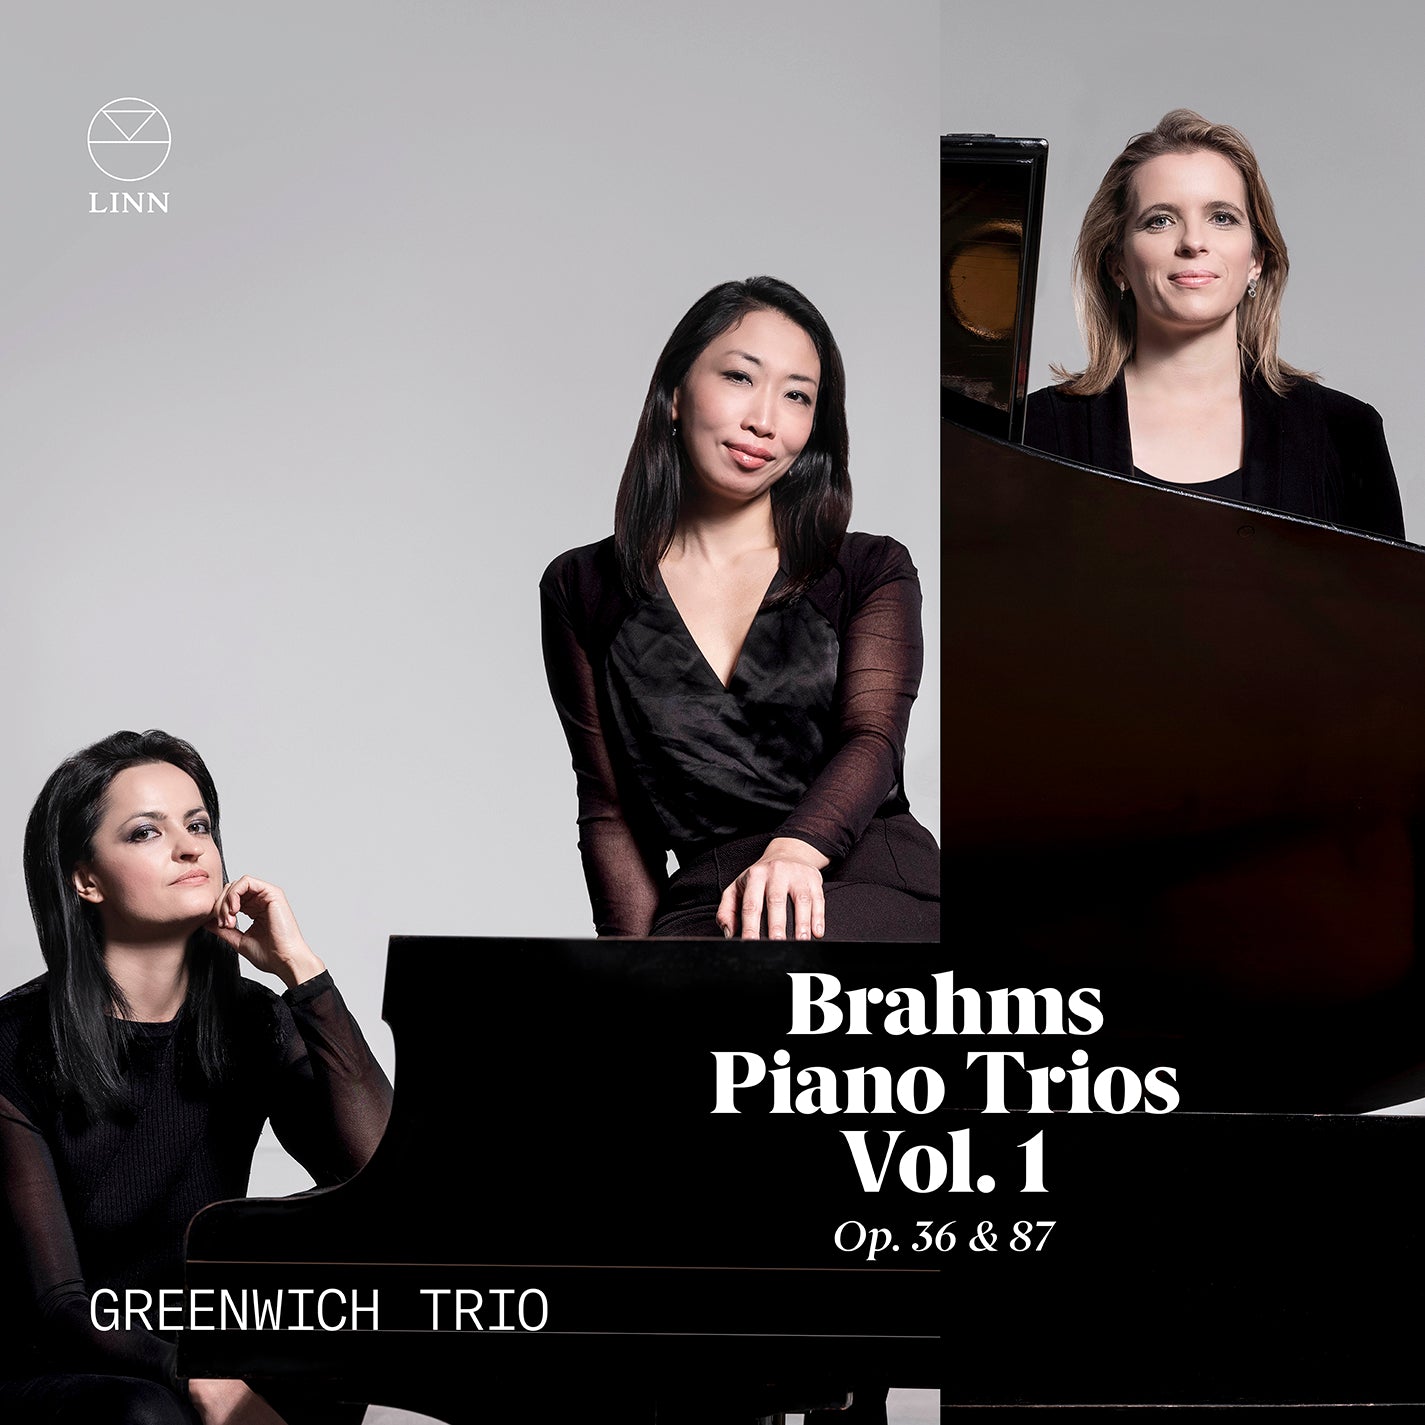 Brahms: Piano Trios Vol. 1, Op. 36 & 87 / Greenwich Trio